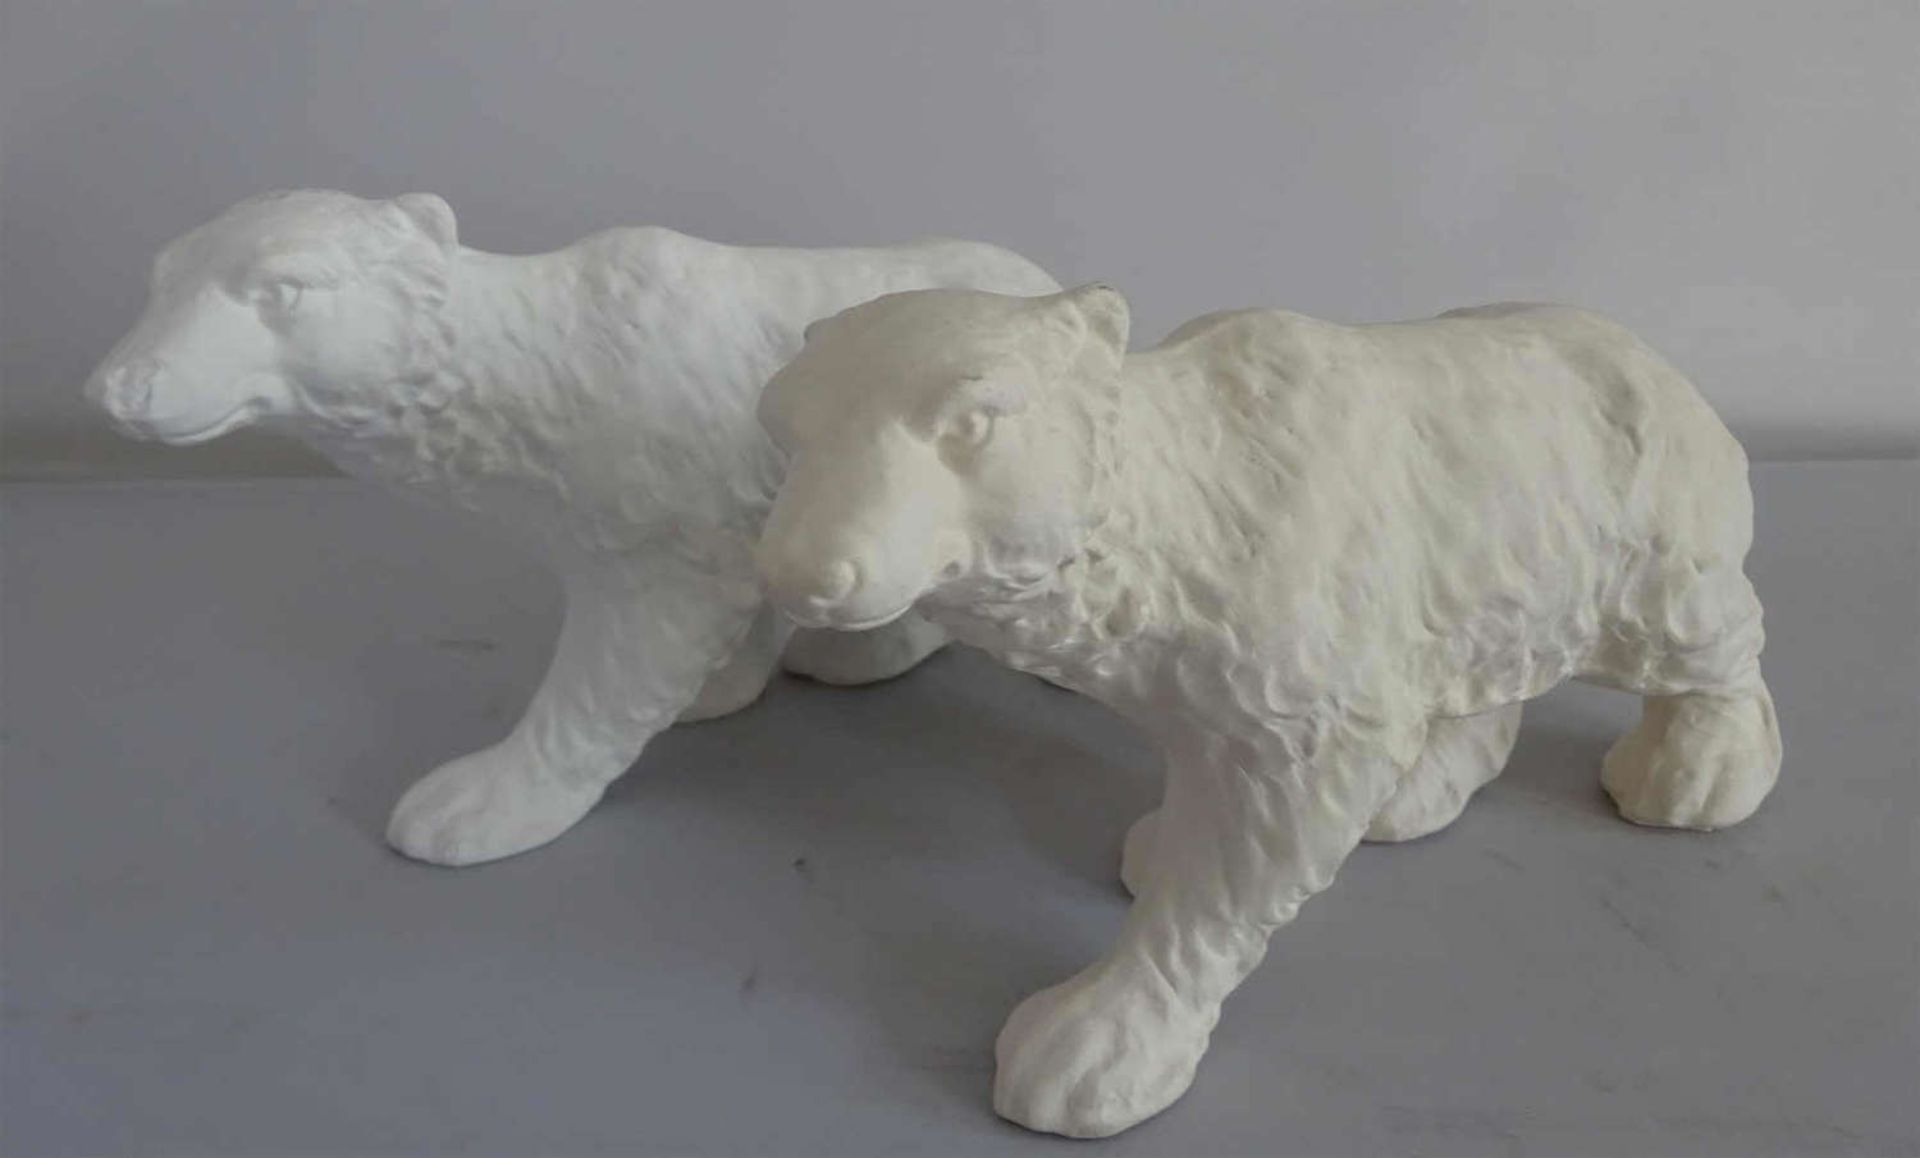 2 Gipsfiguren "Eisbären" Frankenthaler Modelformen, höhe ca. 7 cm, breite ca. 12 cm2 gypsum